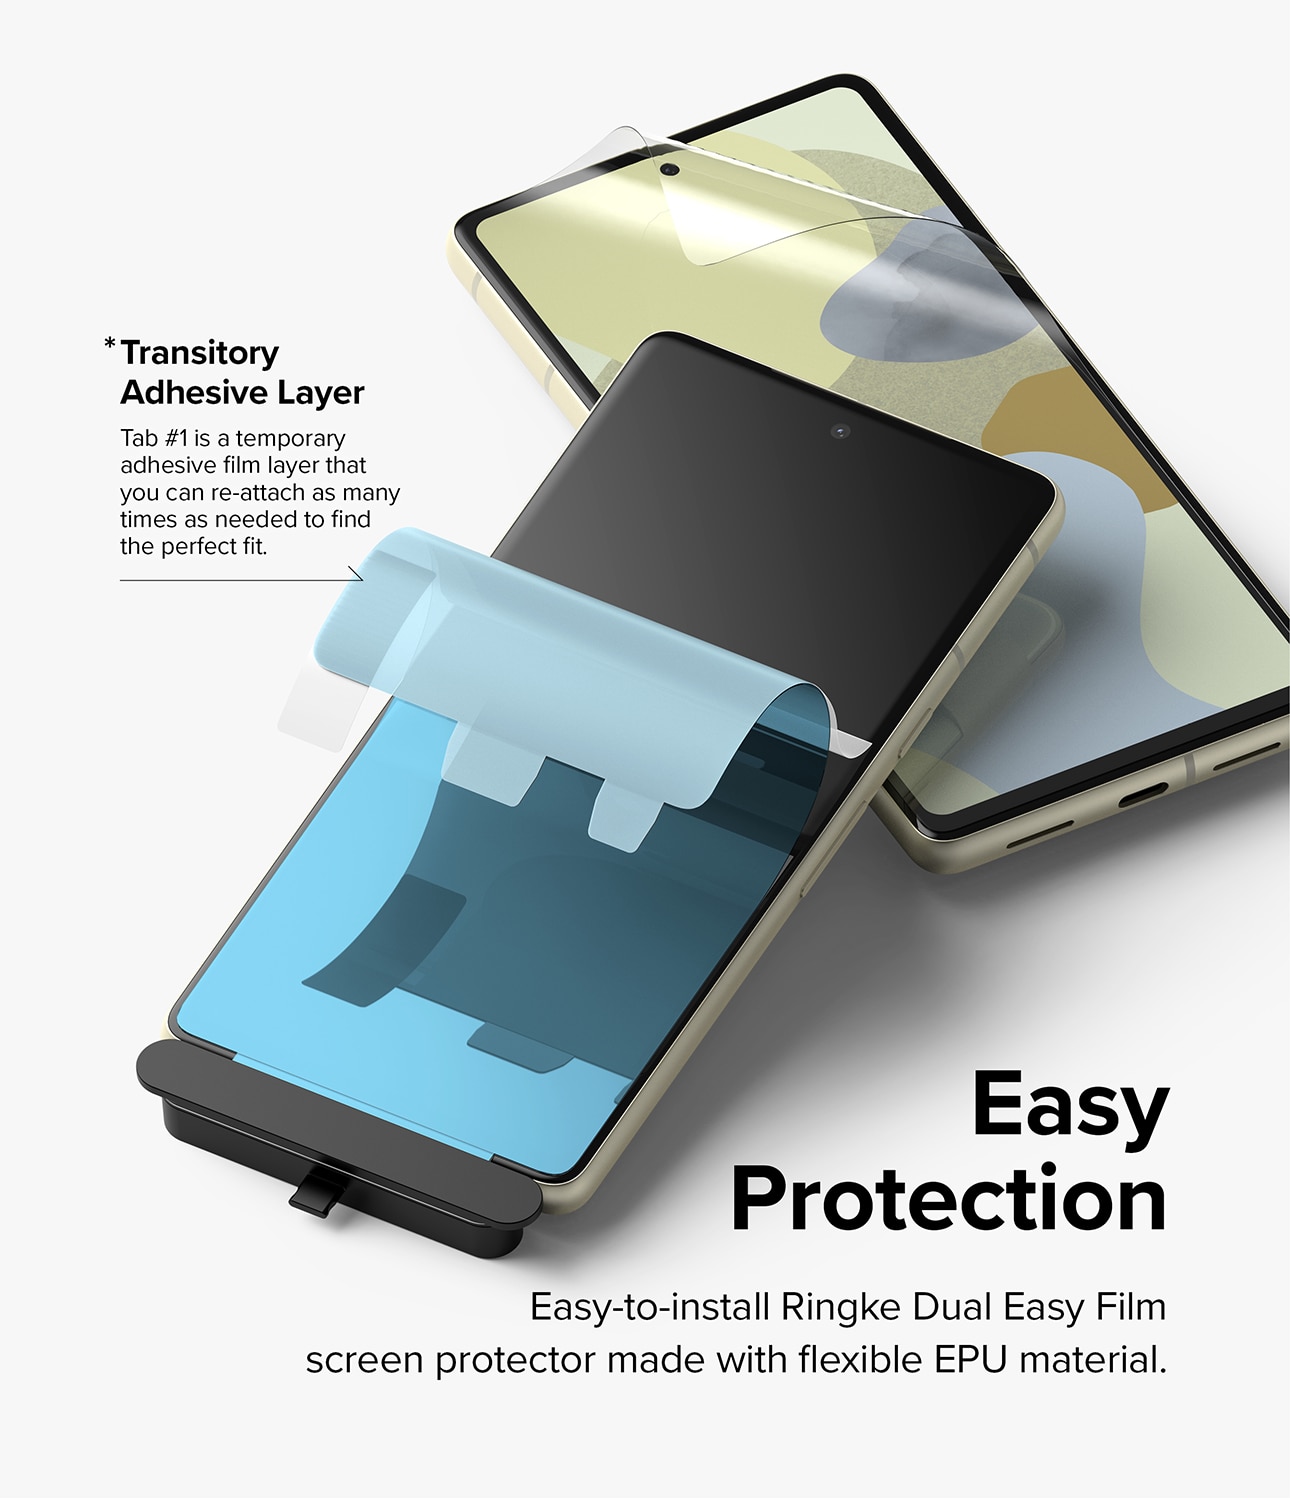 Dual Easy Screen Protector (2 pezzi) Google Pixel 7